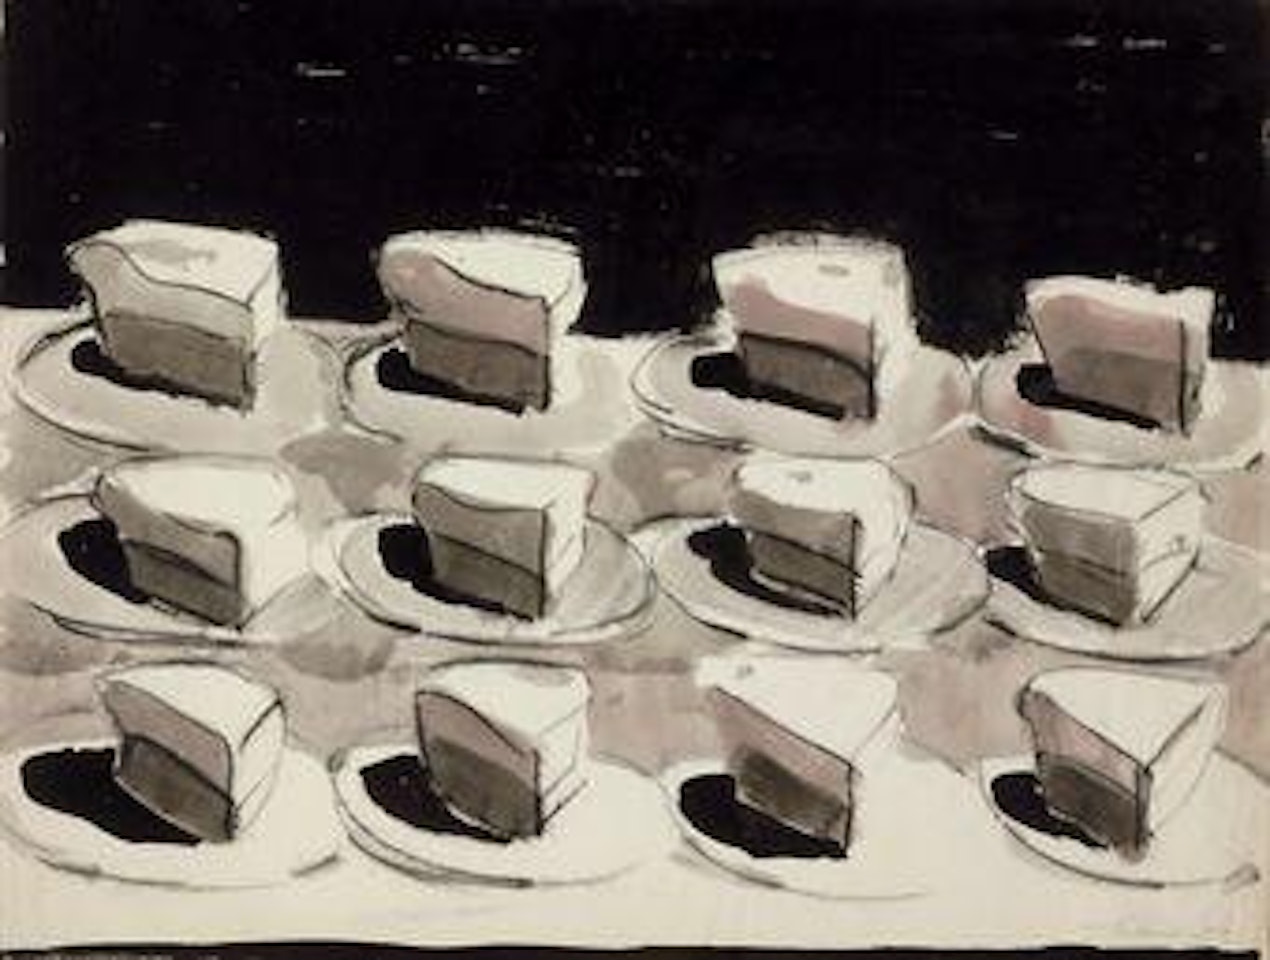 Shelf of Pies by Wayne Thiebaud